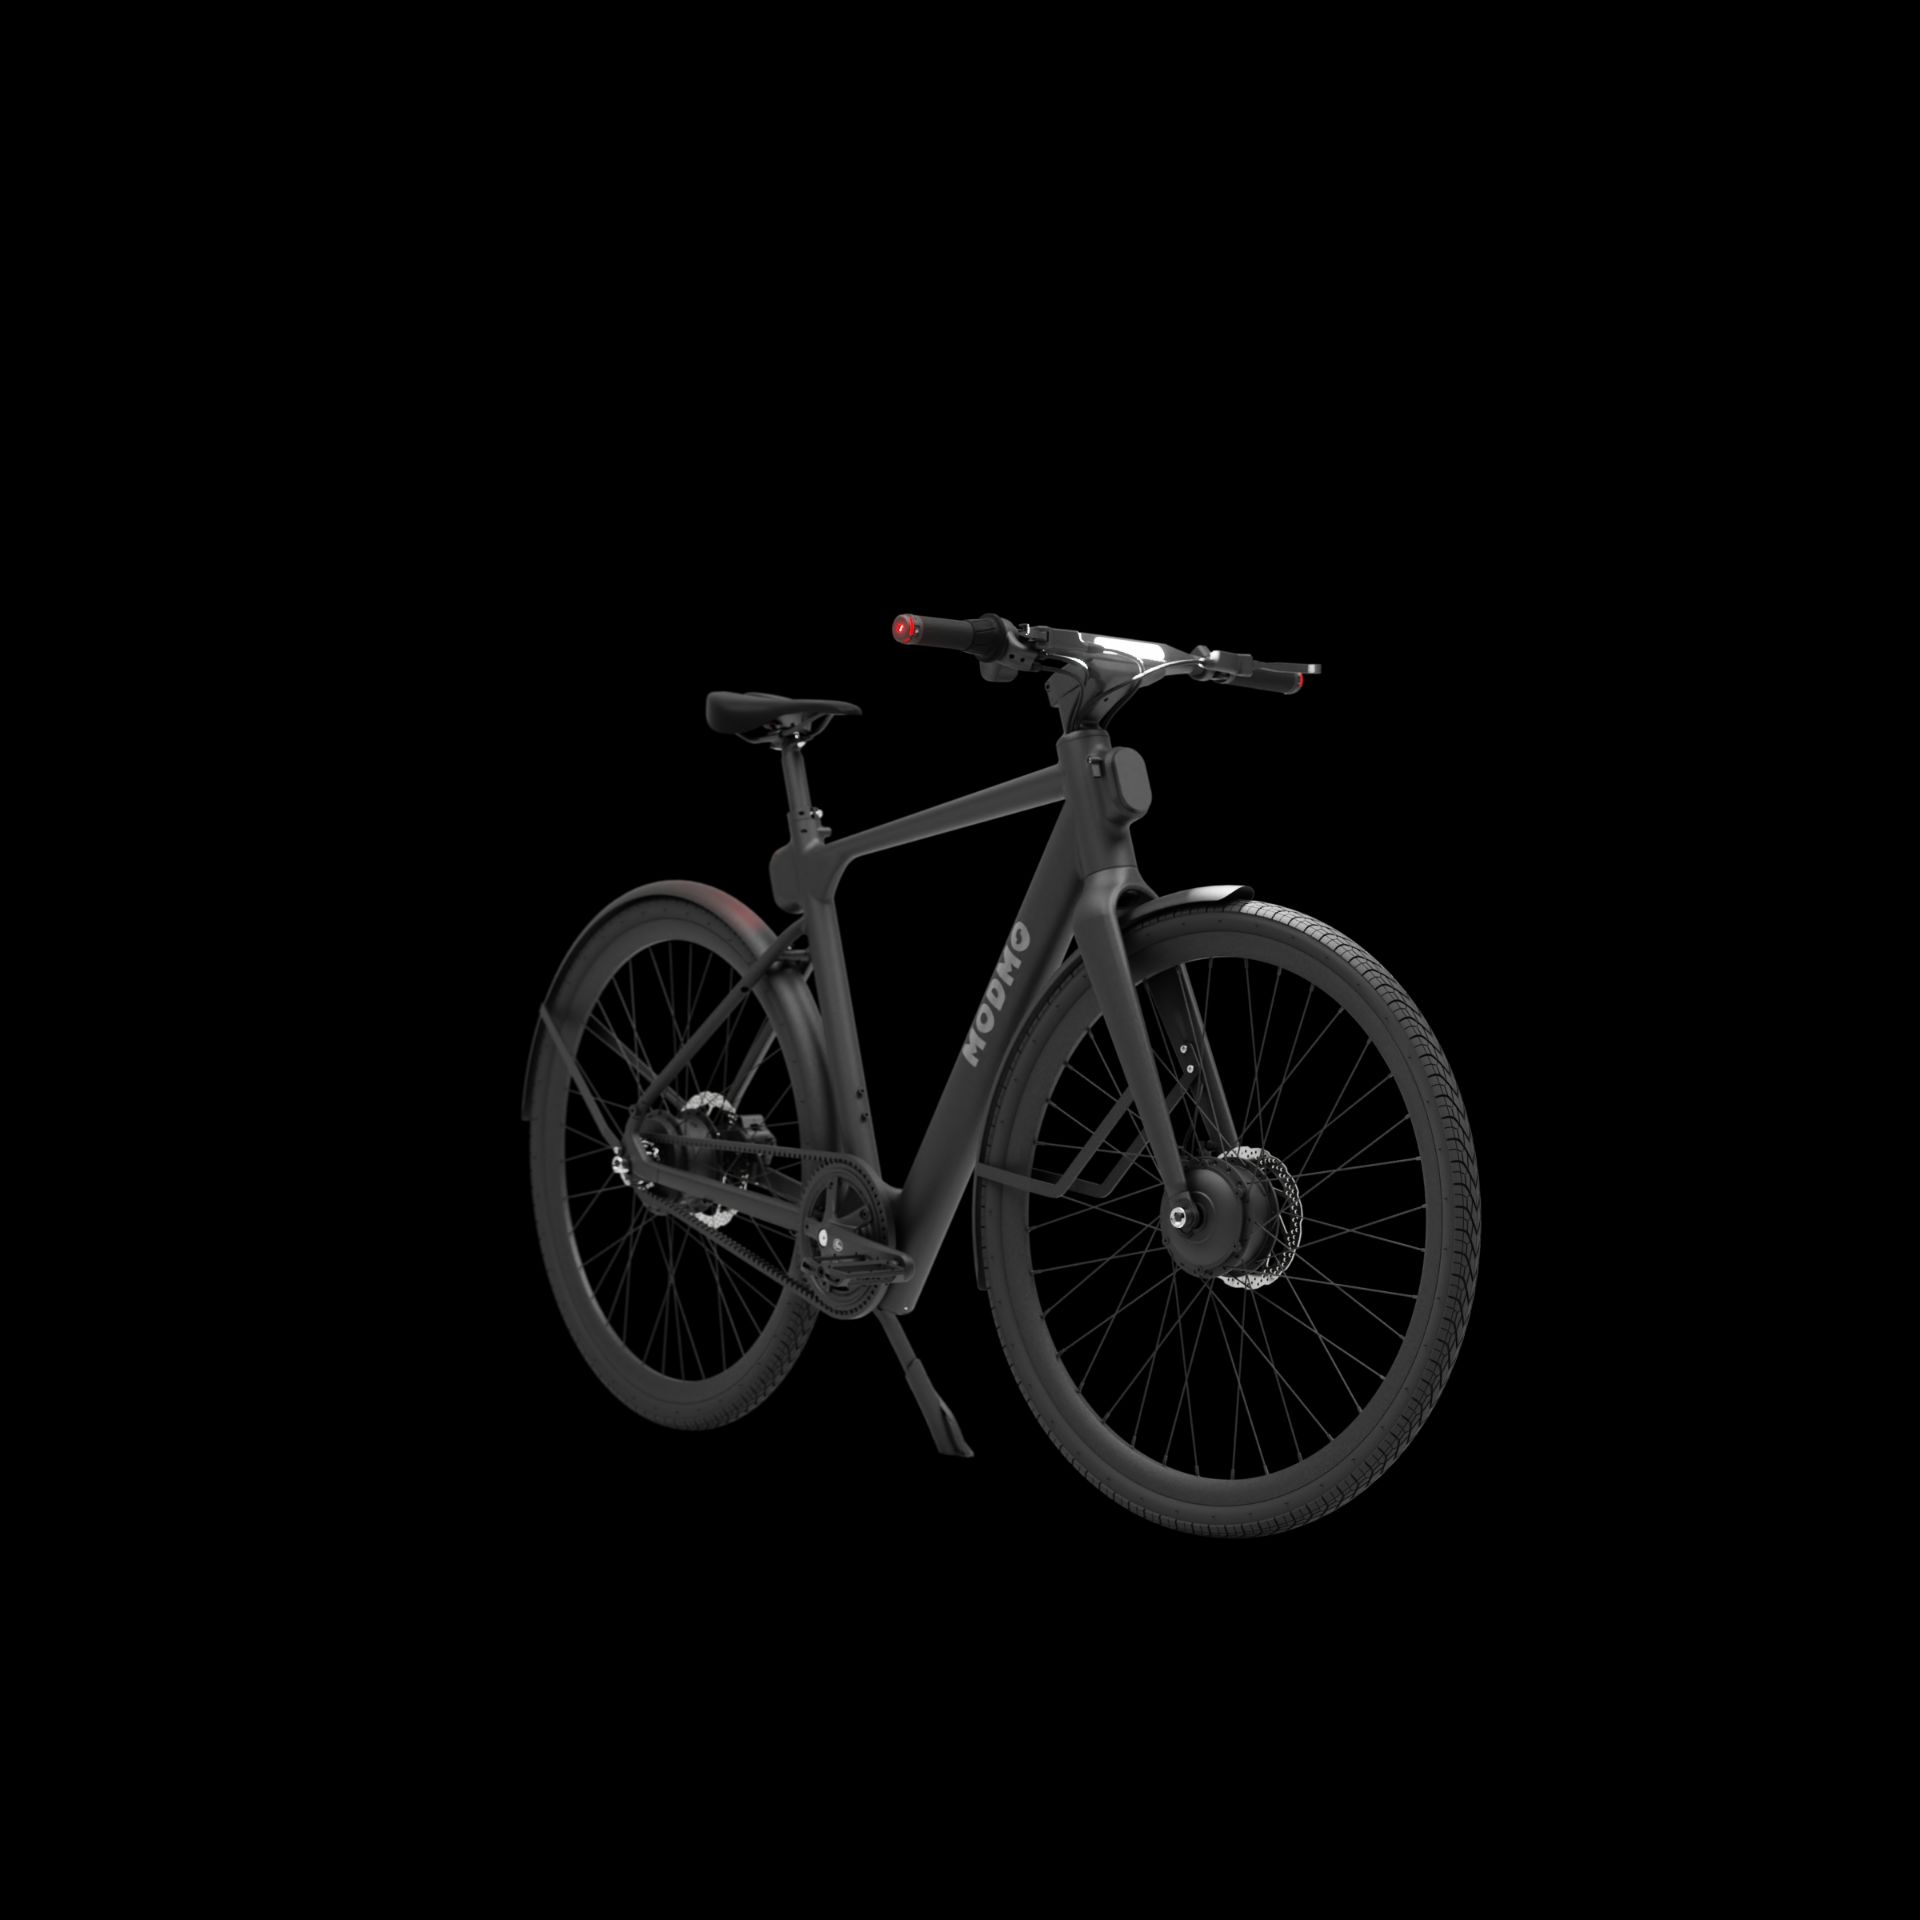 Modmo Saigon+ Electric Bicycle - RRP £2800 - Size S (Rider: 140-155cm) - Image 3 of 20